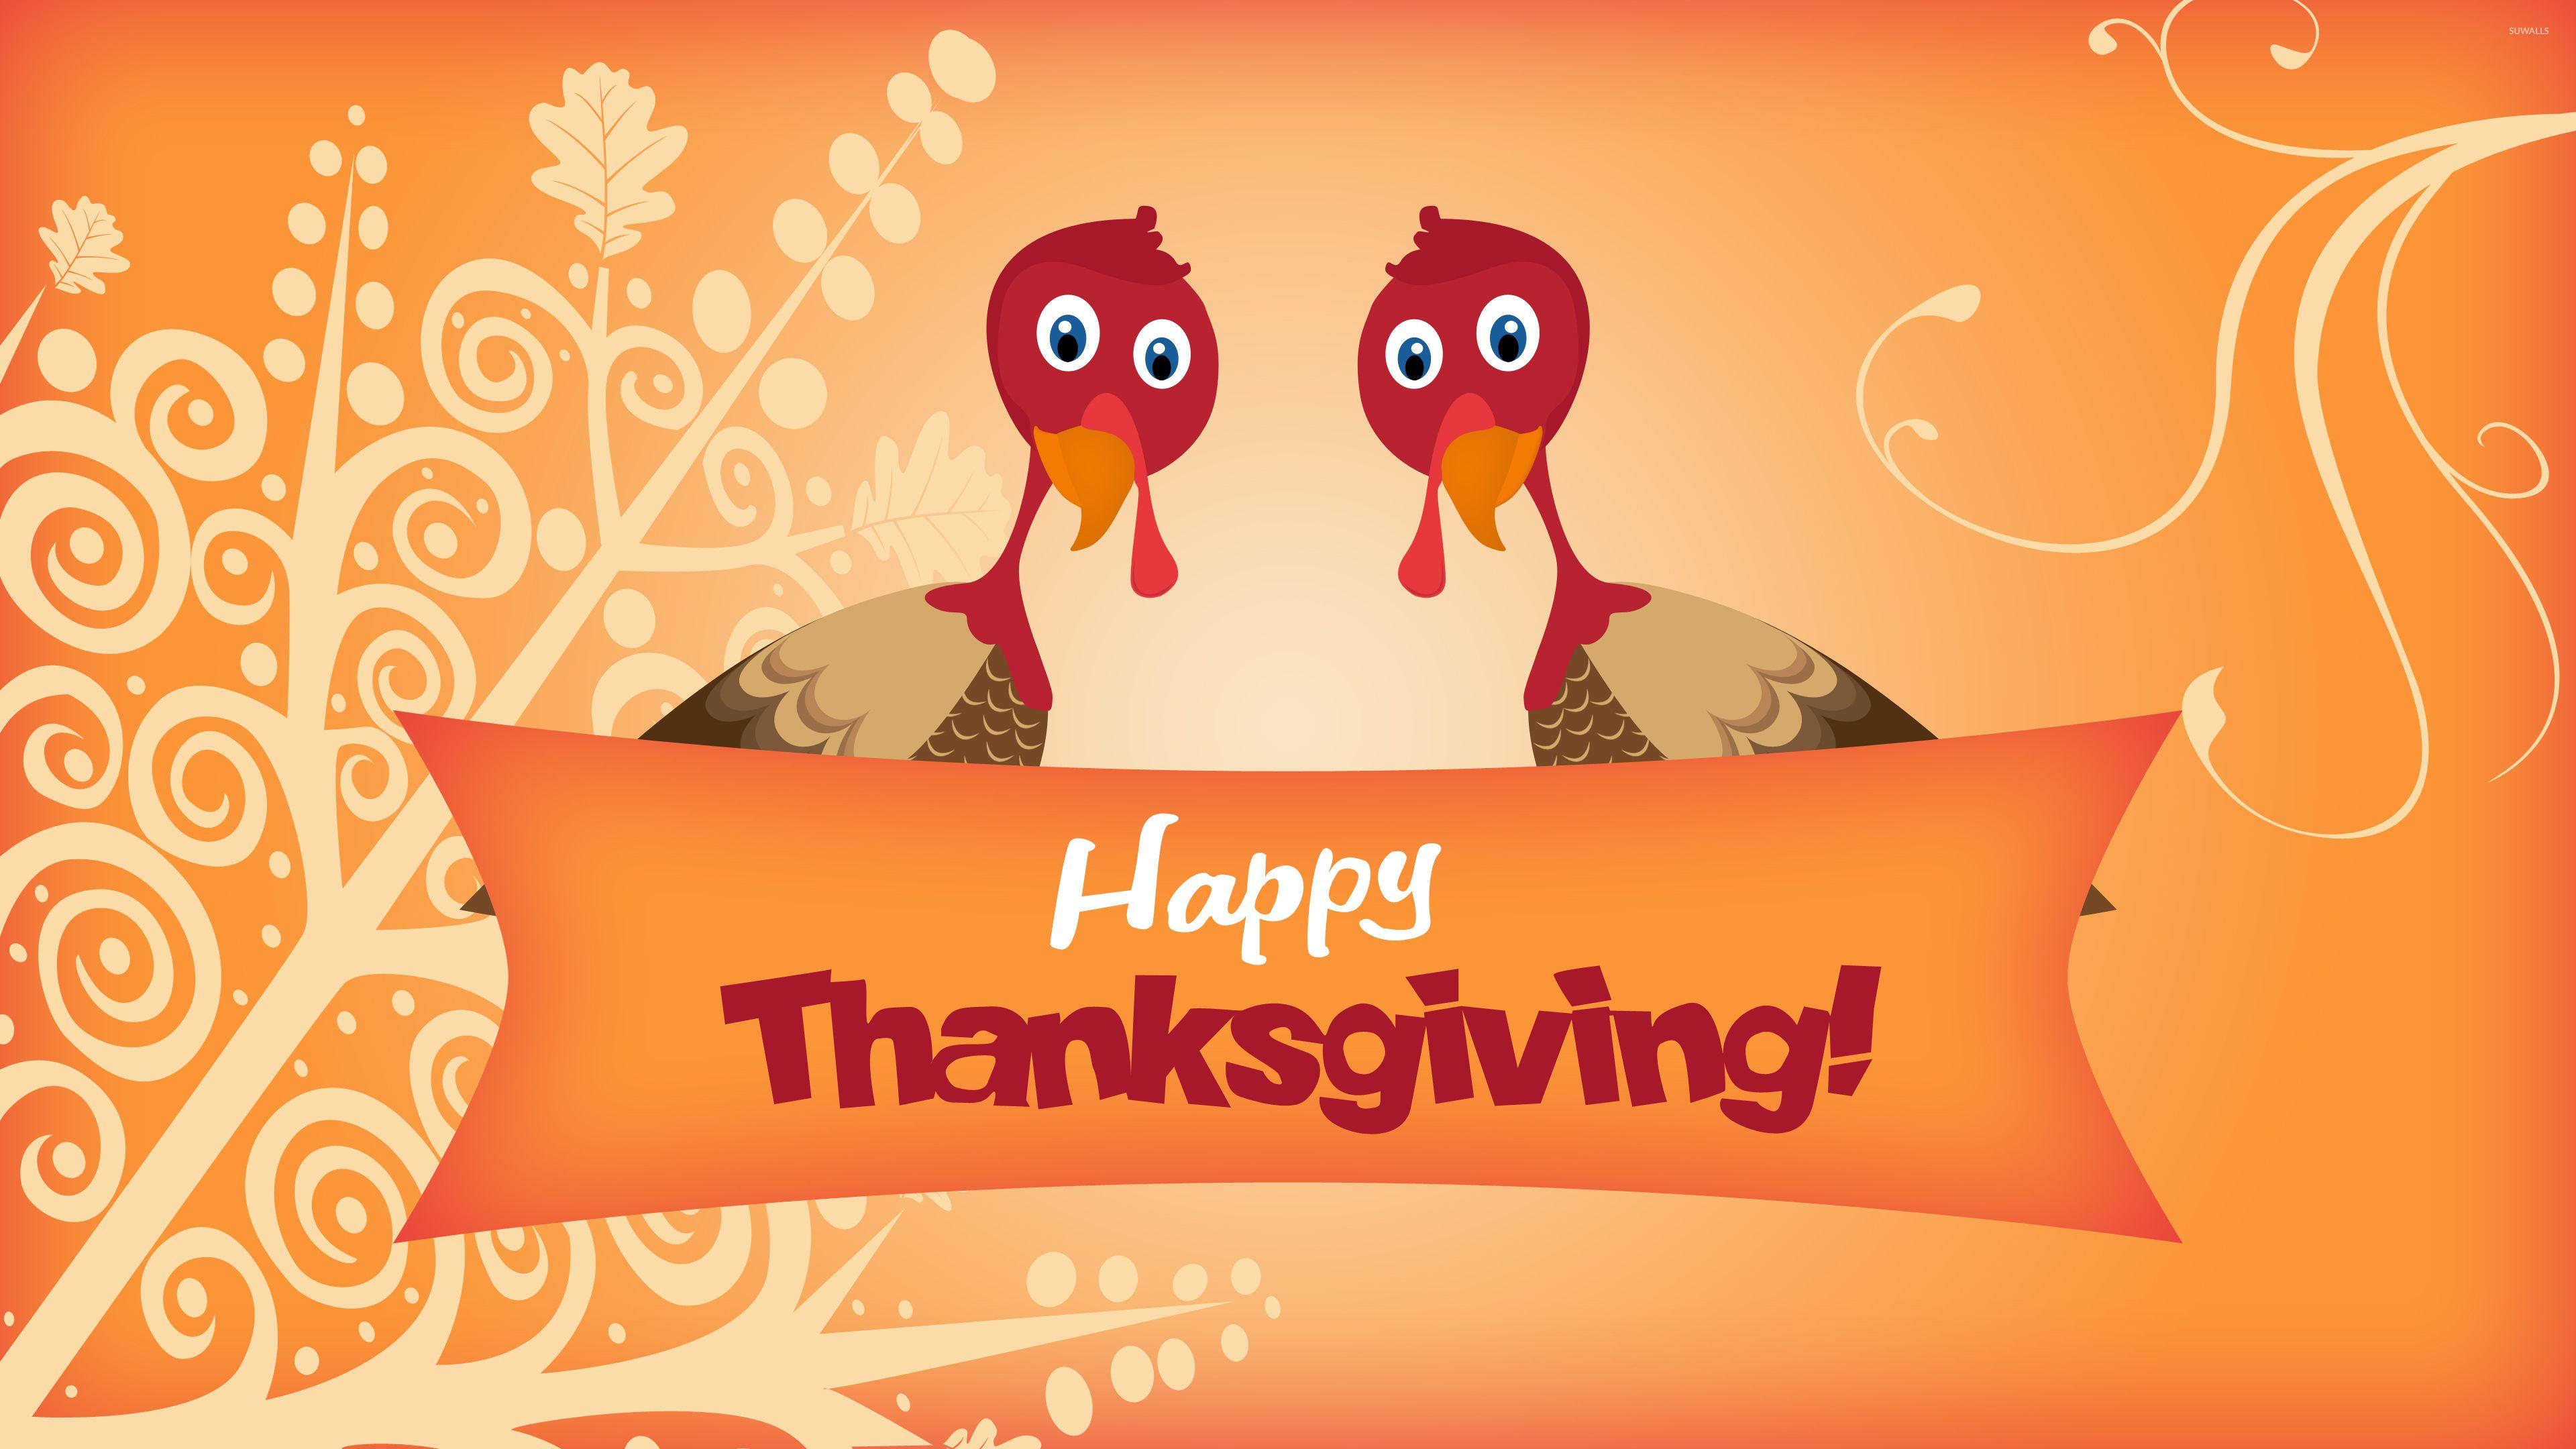 Two turkeys wishing you Happy Thanksgiving wallpaper